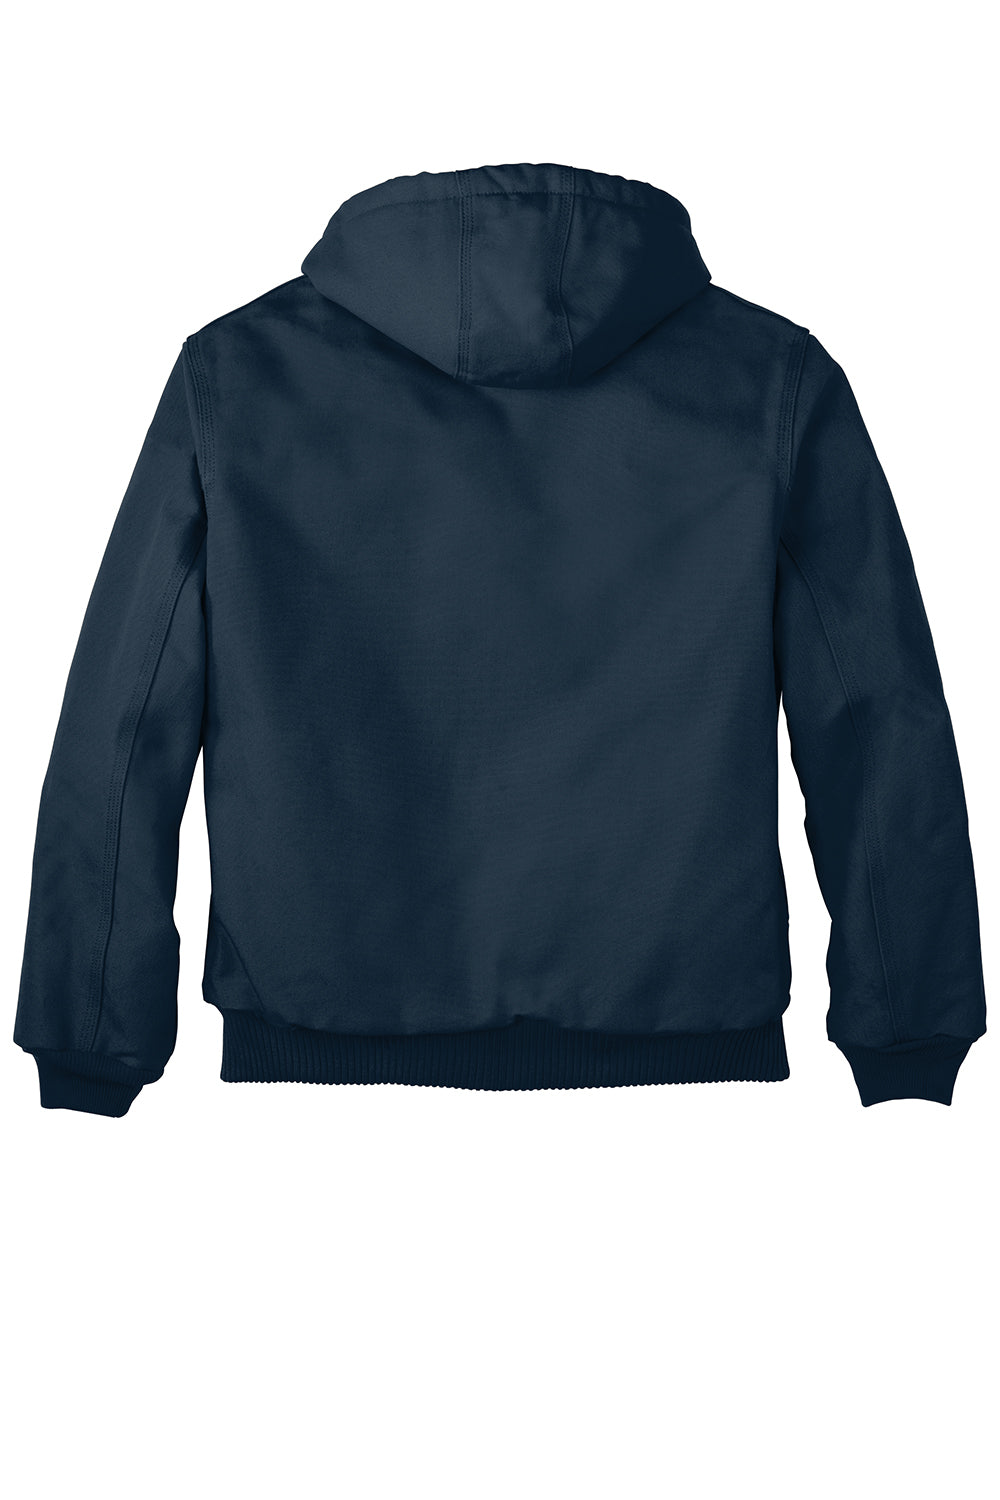 Carhartt CTSJ140/CTTSJ140 Mens Wind & Water Resistant Duck Cloth Full Zip Hooded Work Jacket Navy Blue Flat Back